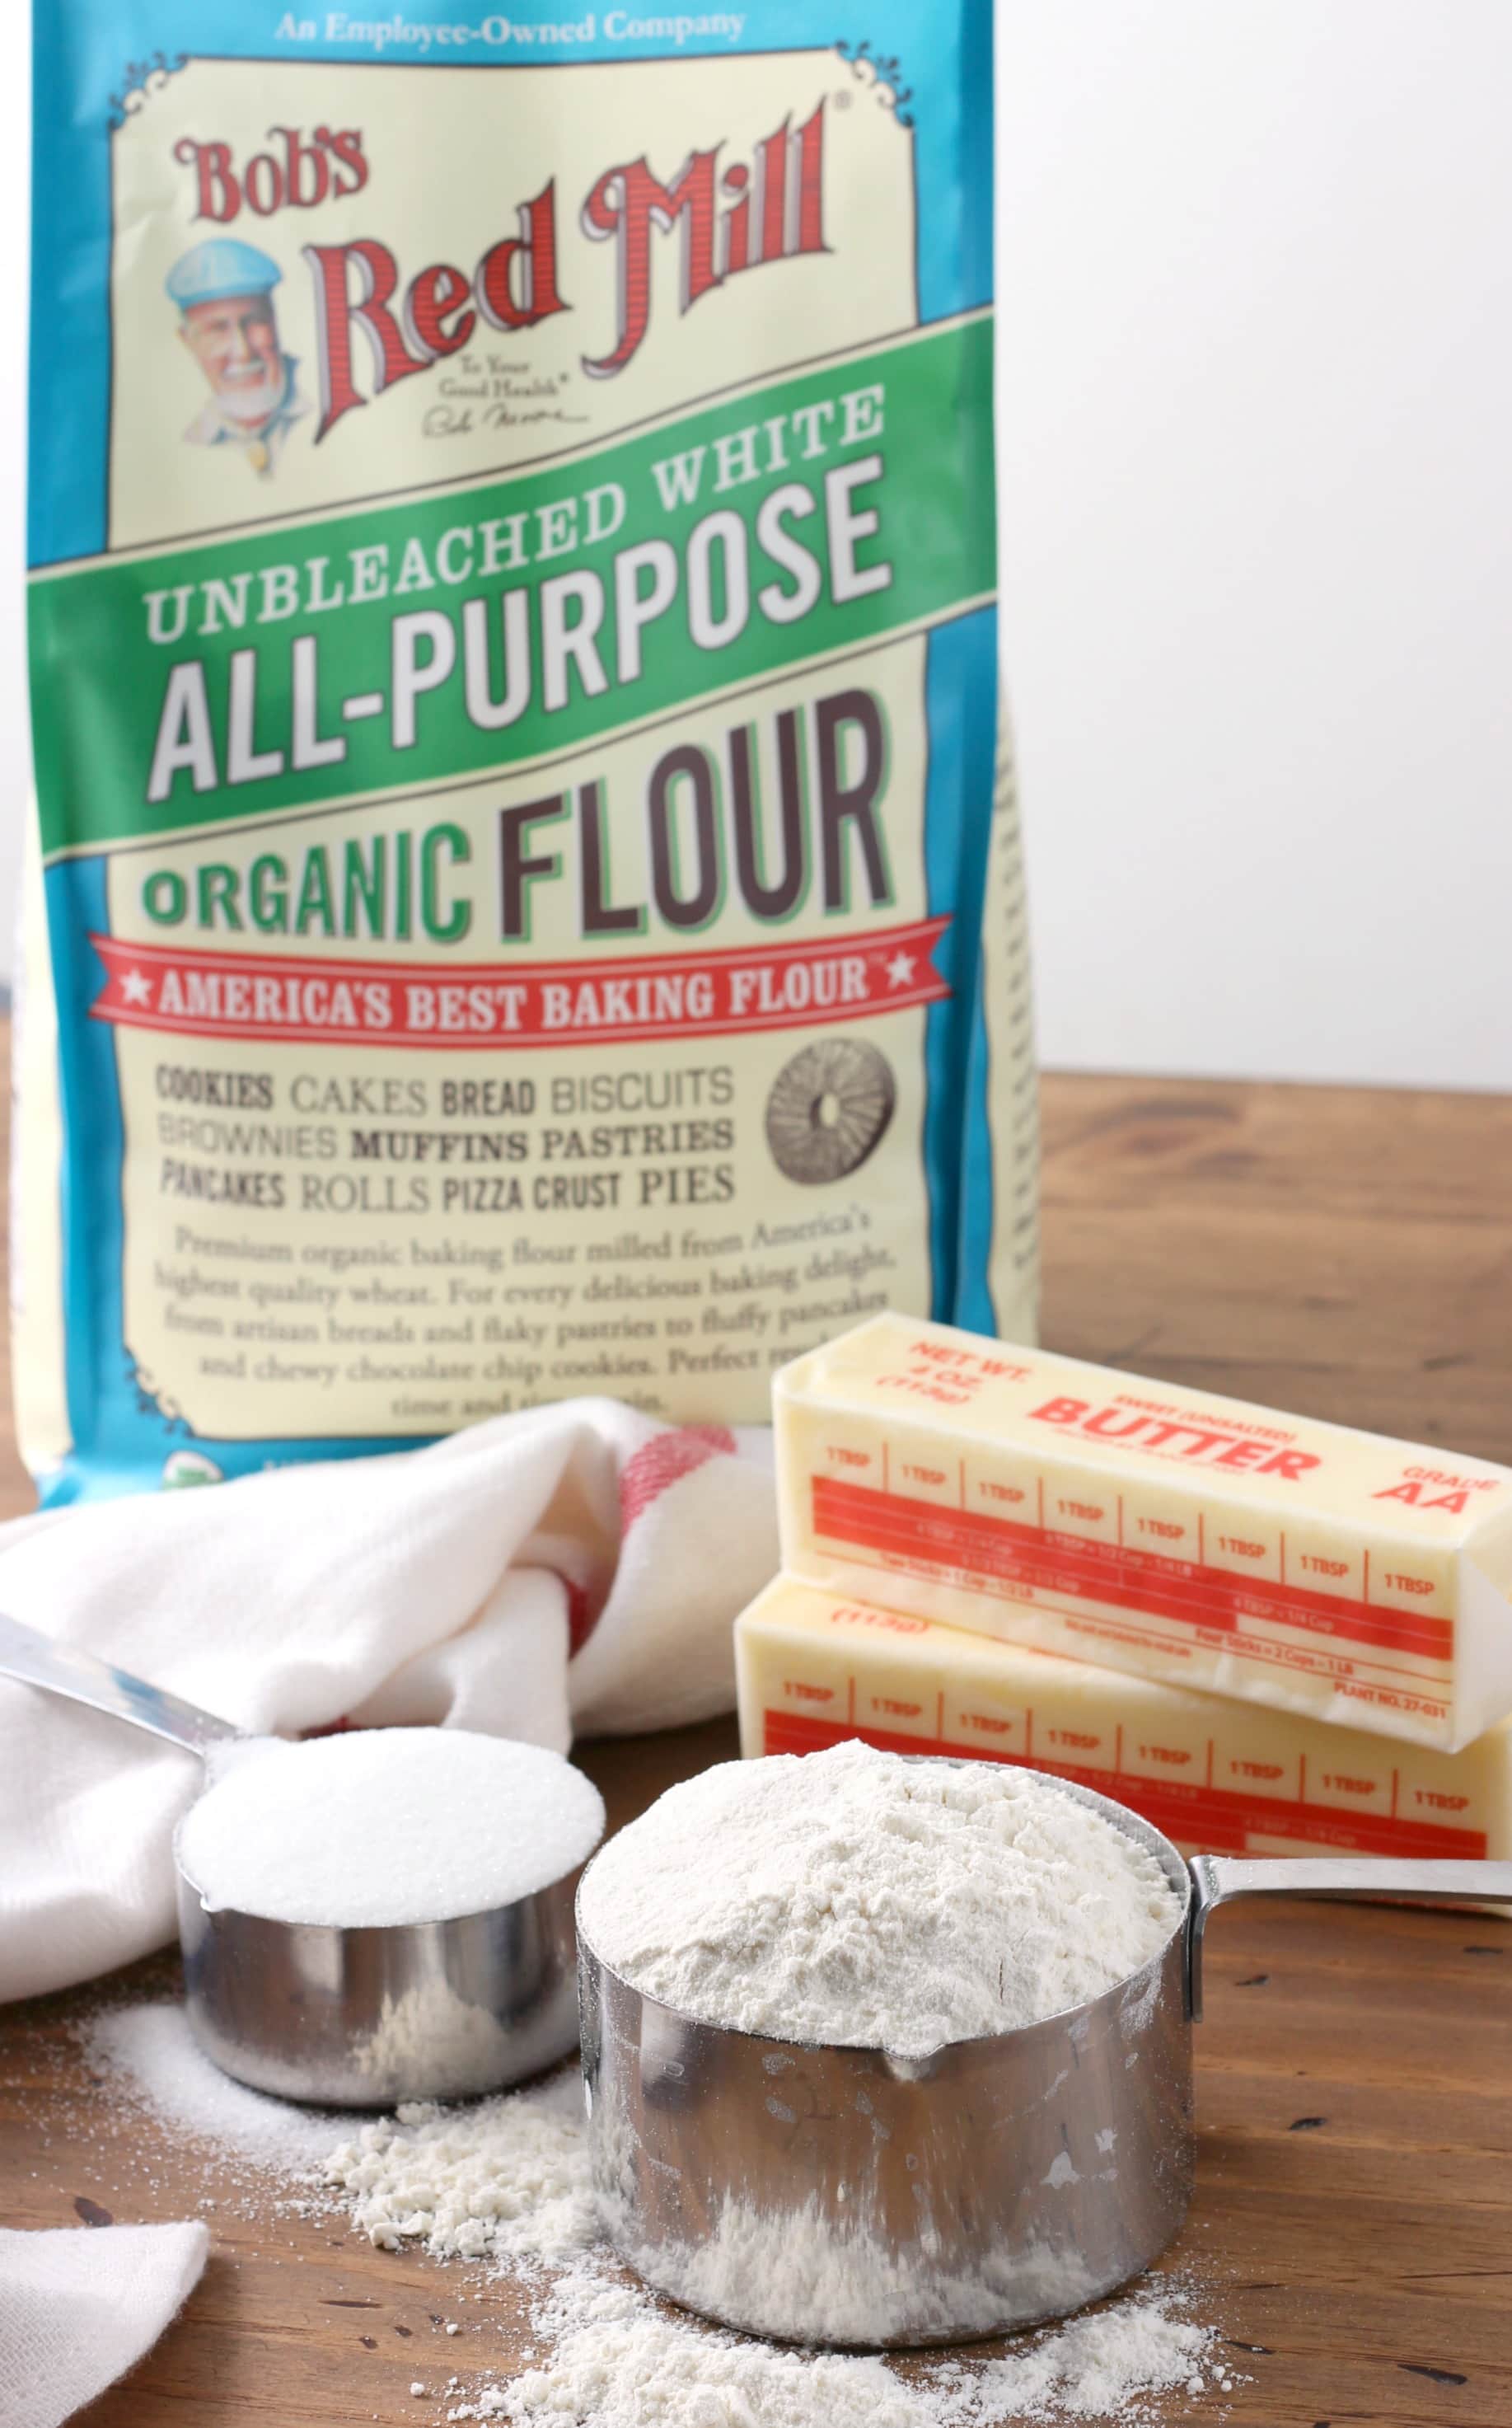 Bob's Red Mill All-Purpose Flour